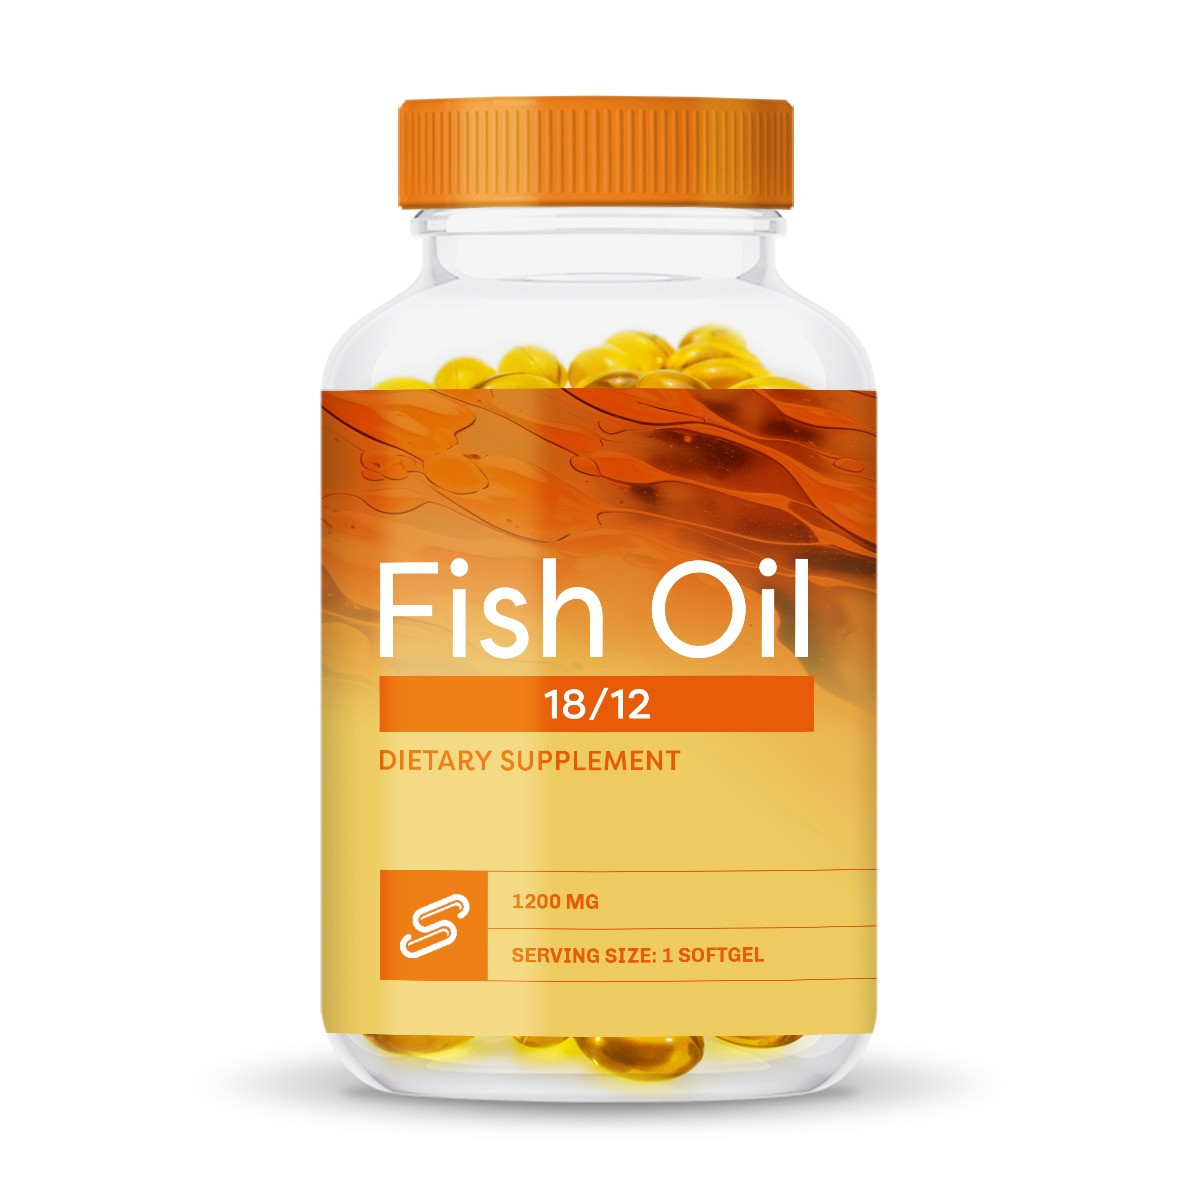 Fish Oil 18/12